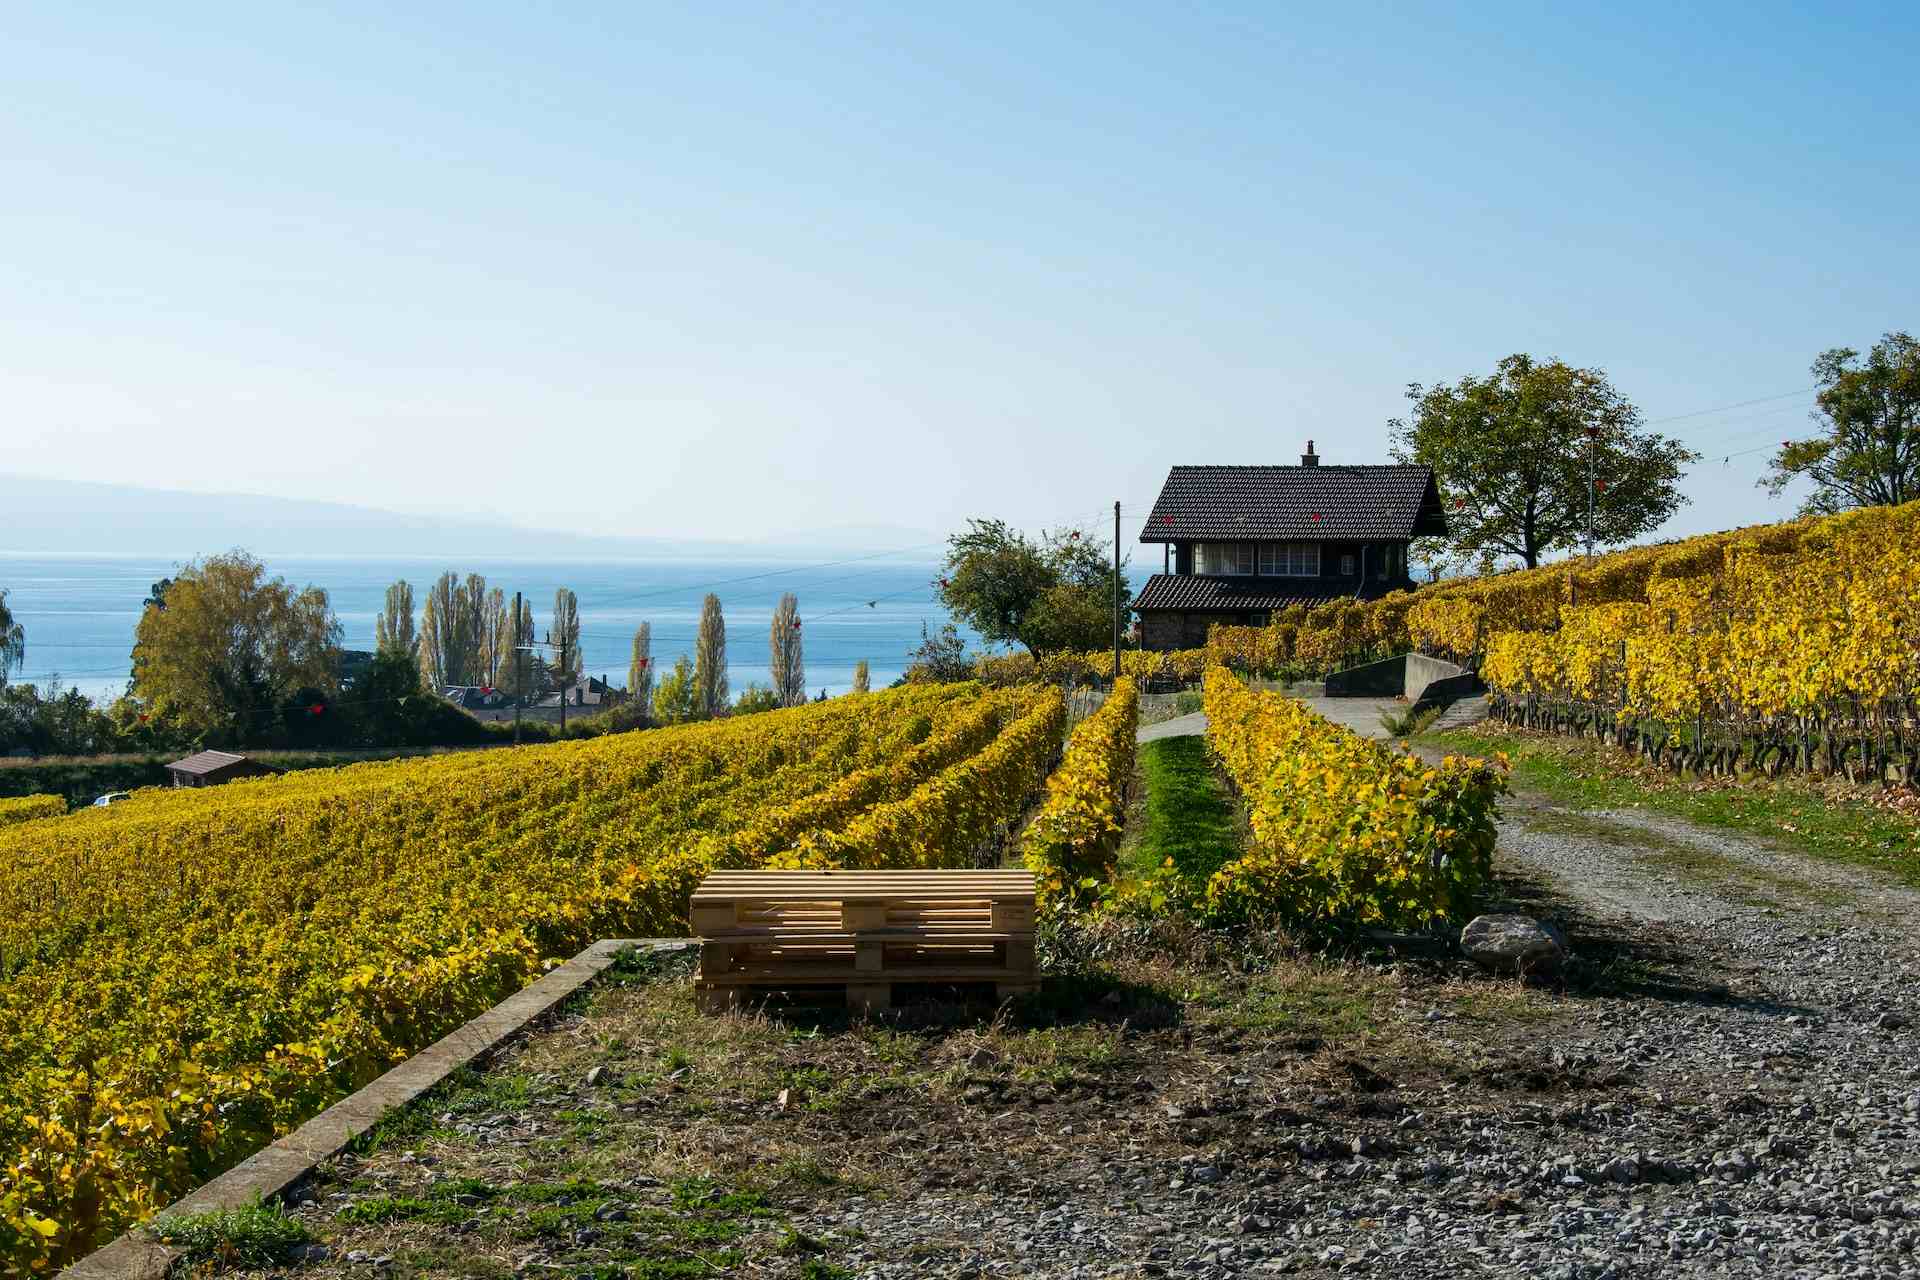 Les miels Brunet, producteur à La Sarraz canton de Vaud en Suisse